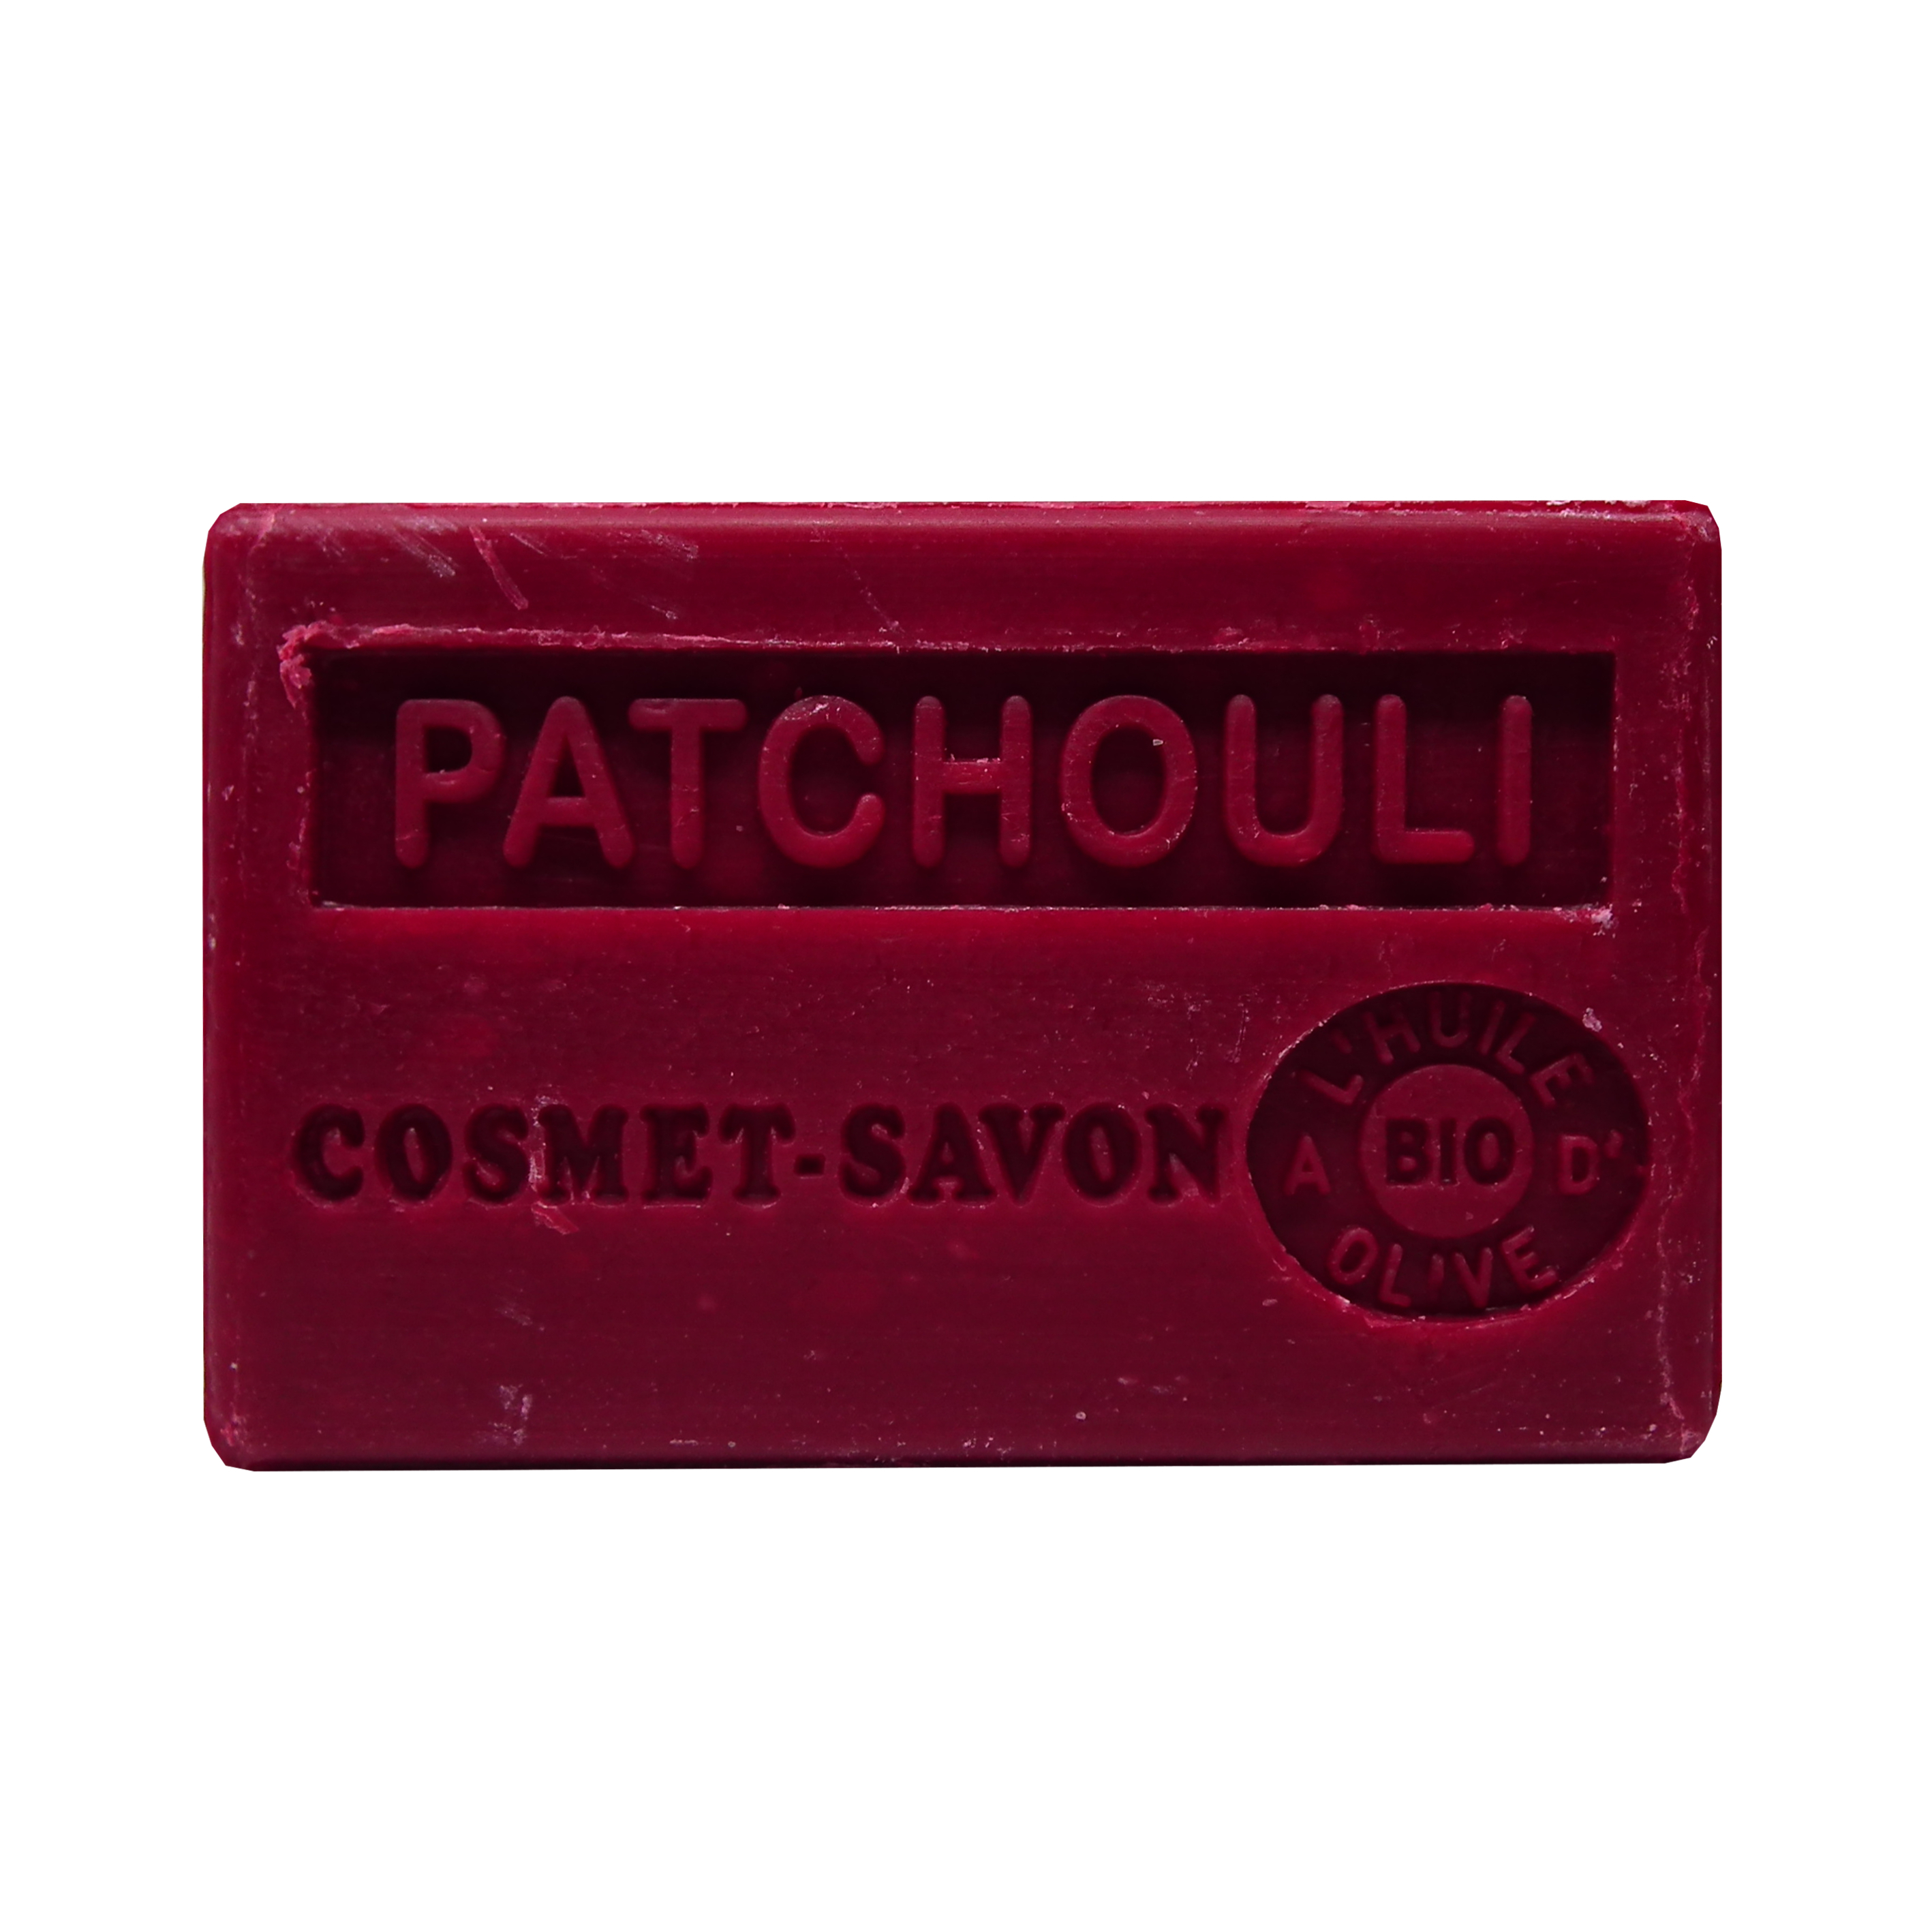 patchouli-savon-125gr-au-beurre-de-karite-bio-cosmet-savon-3665205006652-face-JPEG